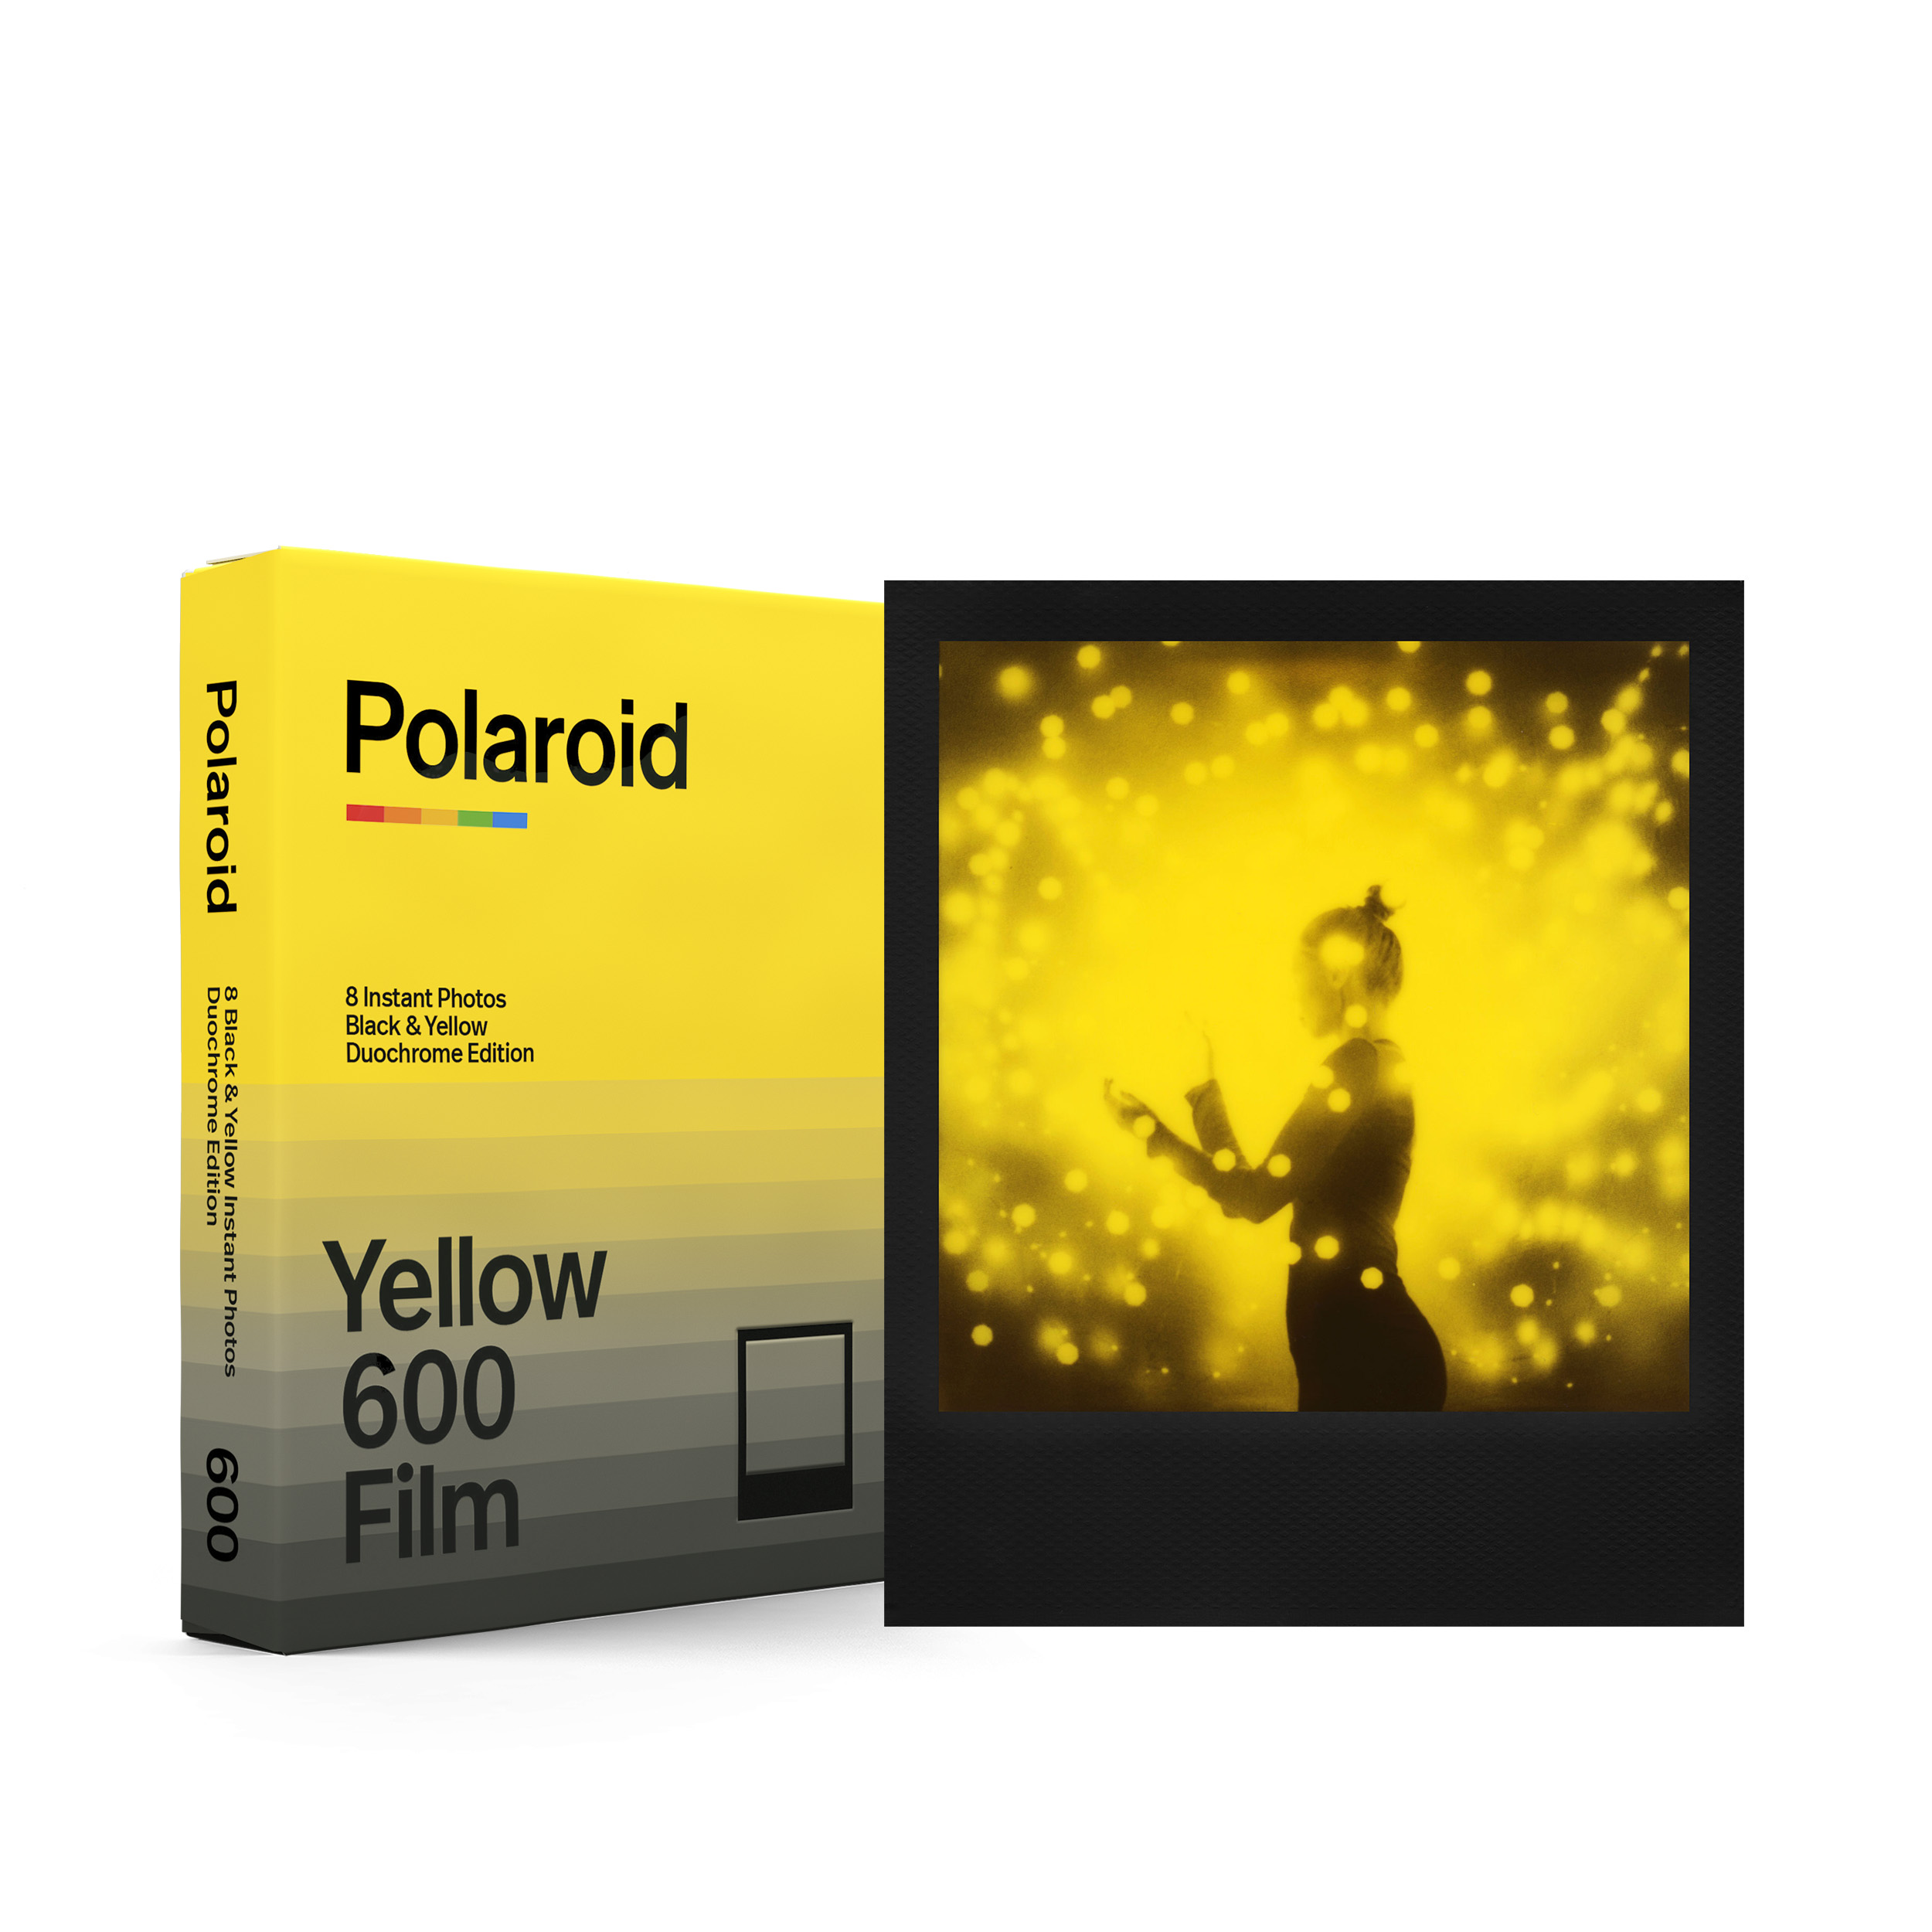 Black & Yellow 600 Film - Duochrome Edition